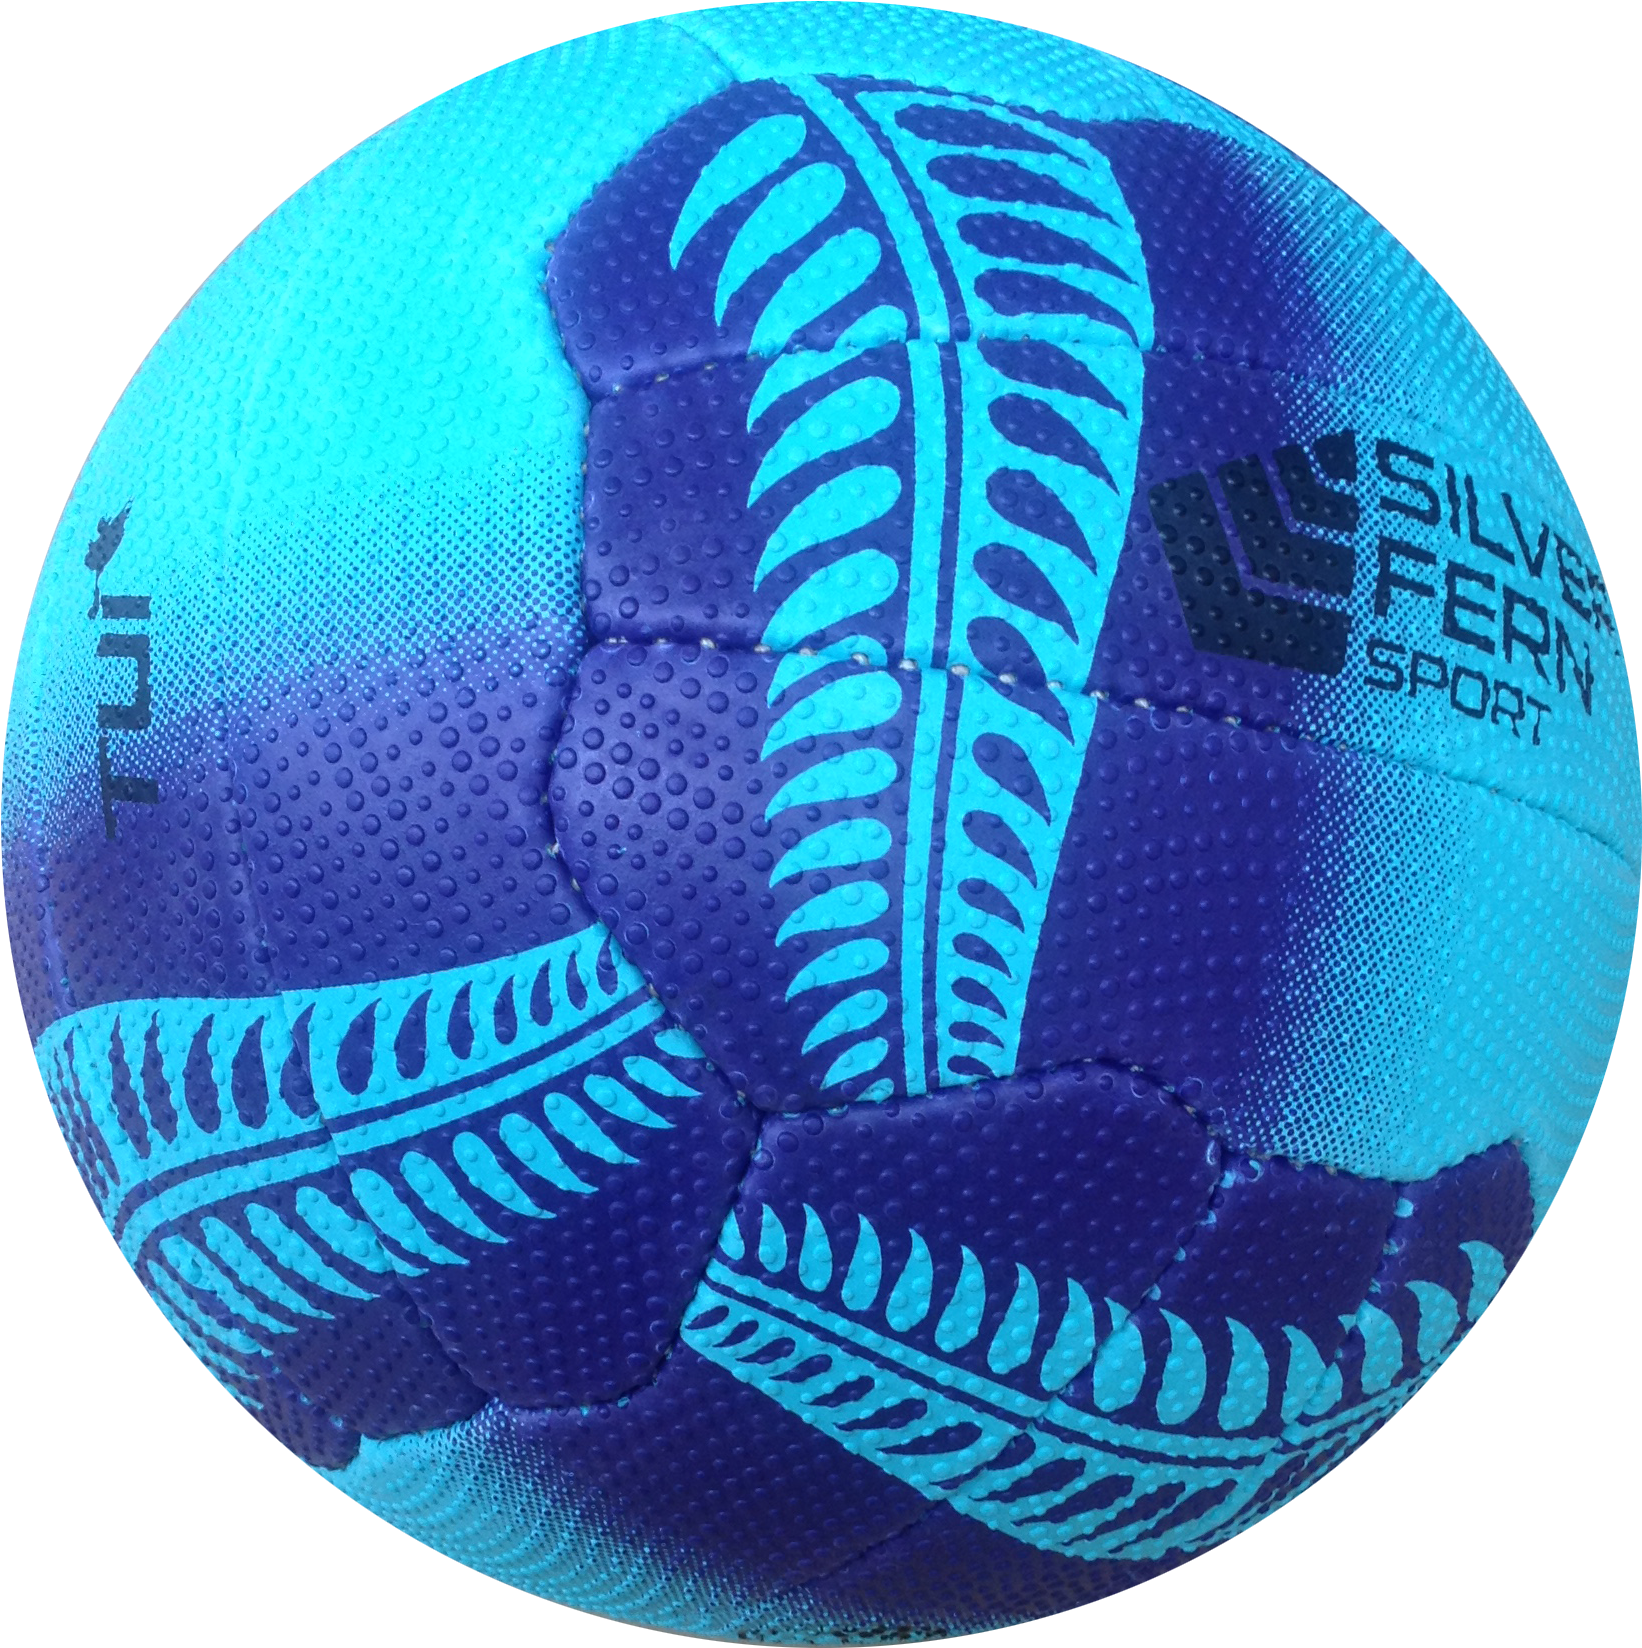 Imagen Transparente de la bola de netball